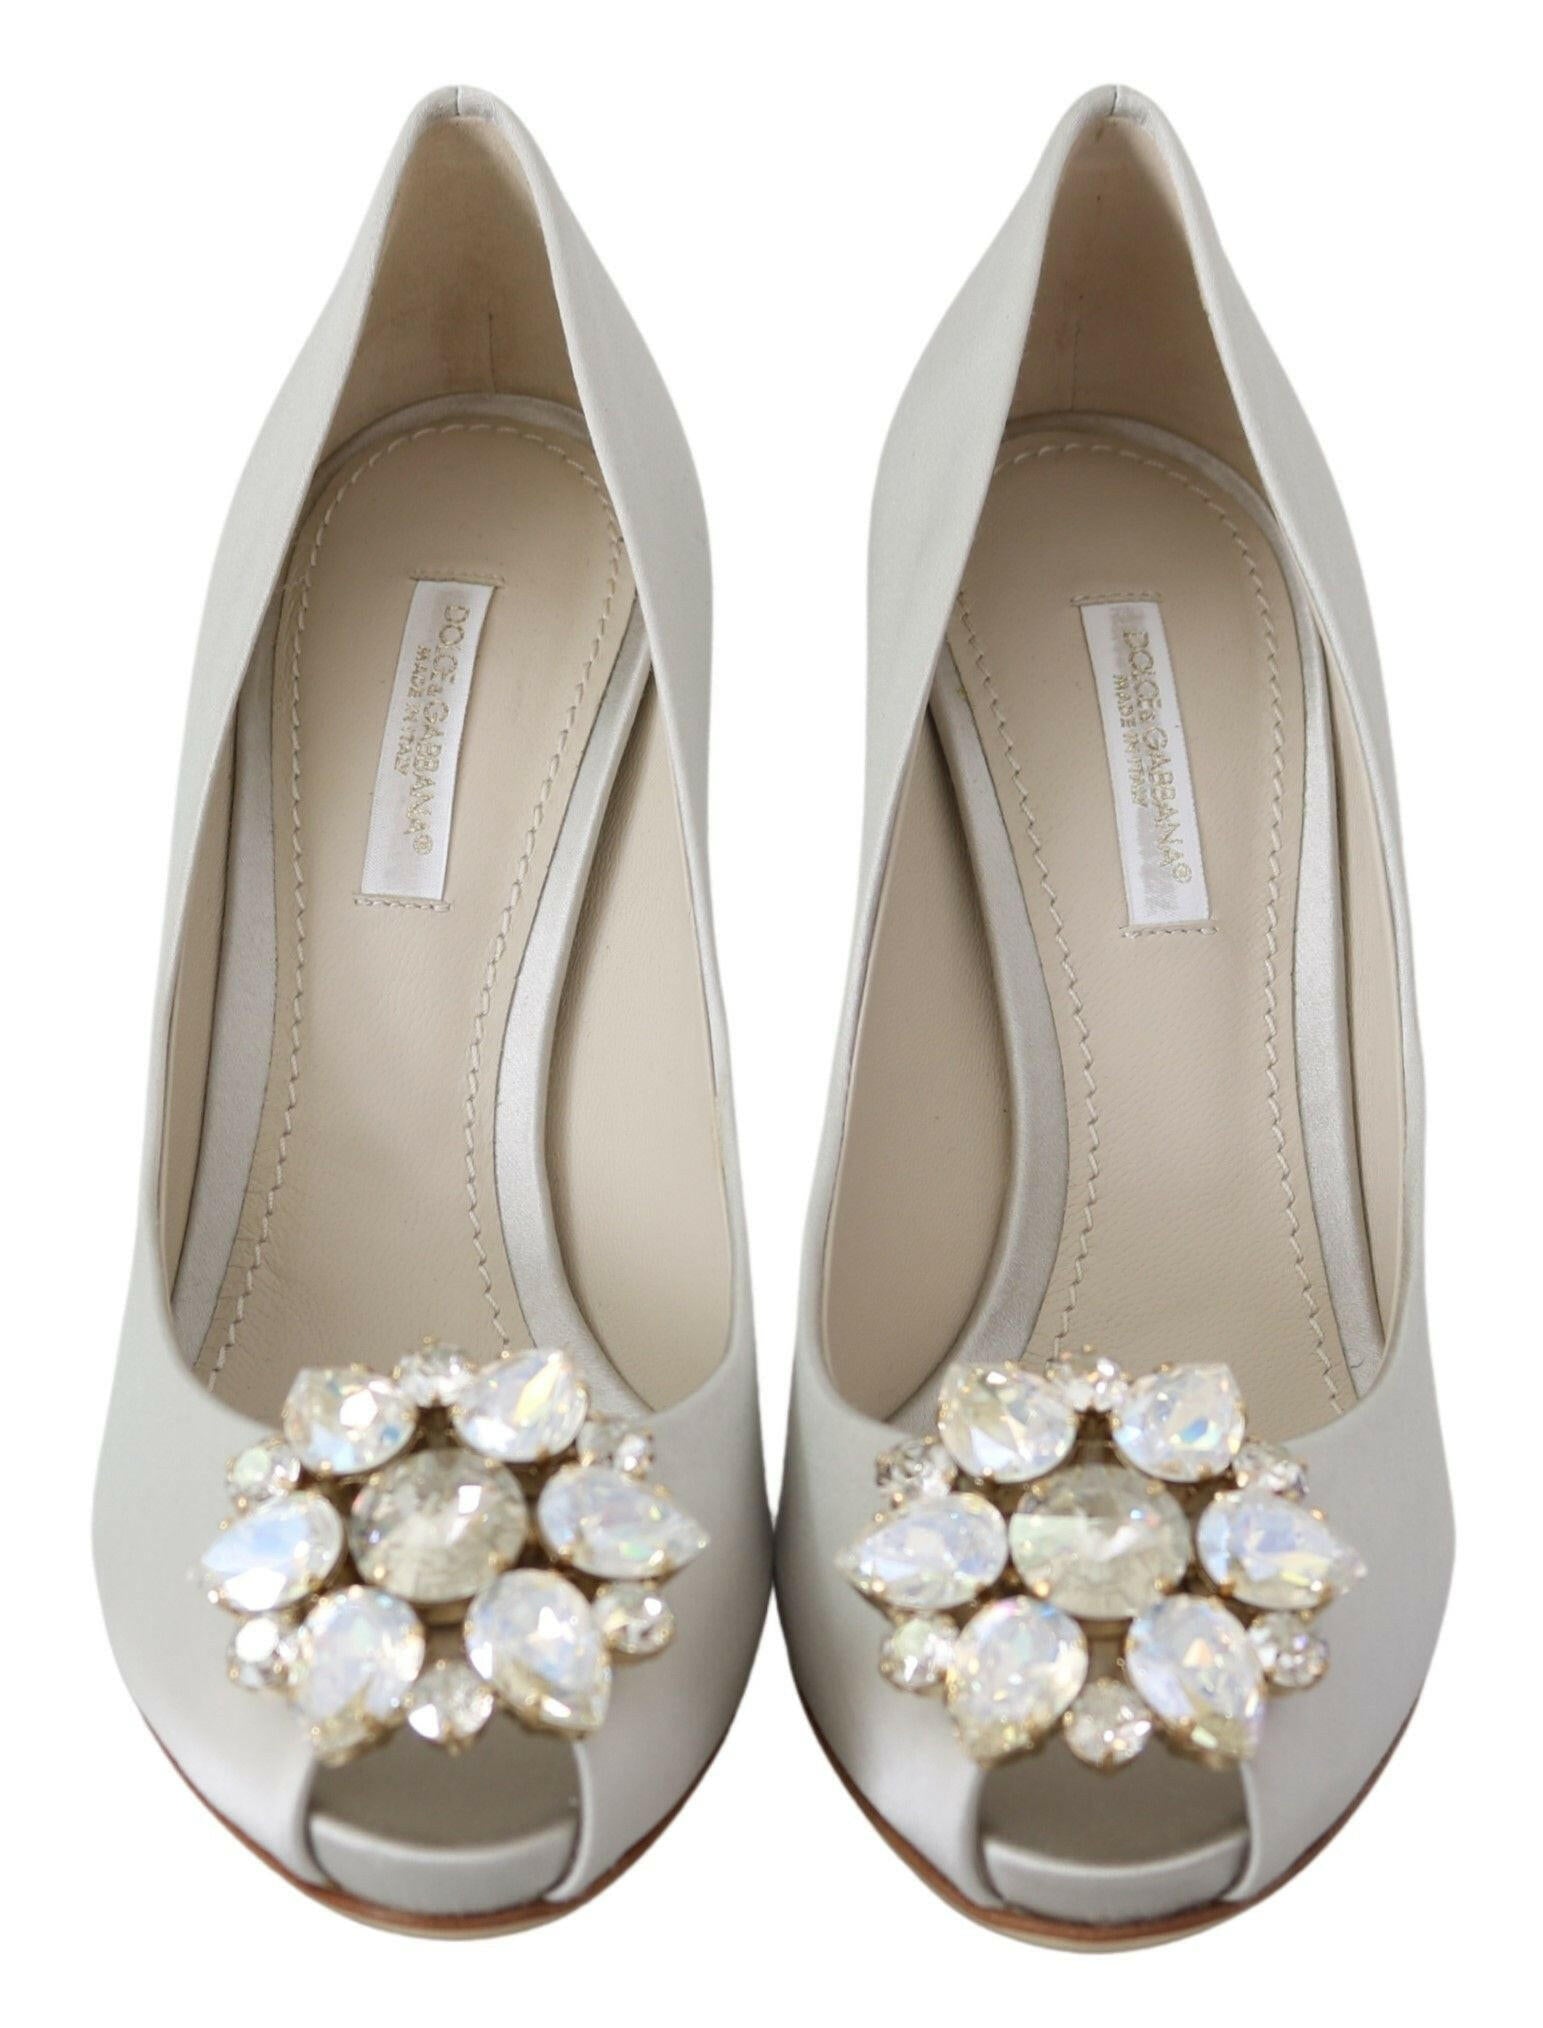 Dolce & Gabbana White Crystals Peep Toe Heels Satin Pumps Shoes - GENUINE AUTHENTIC BRAND LLC  